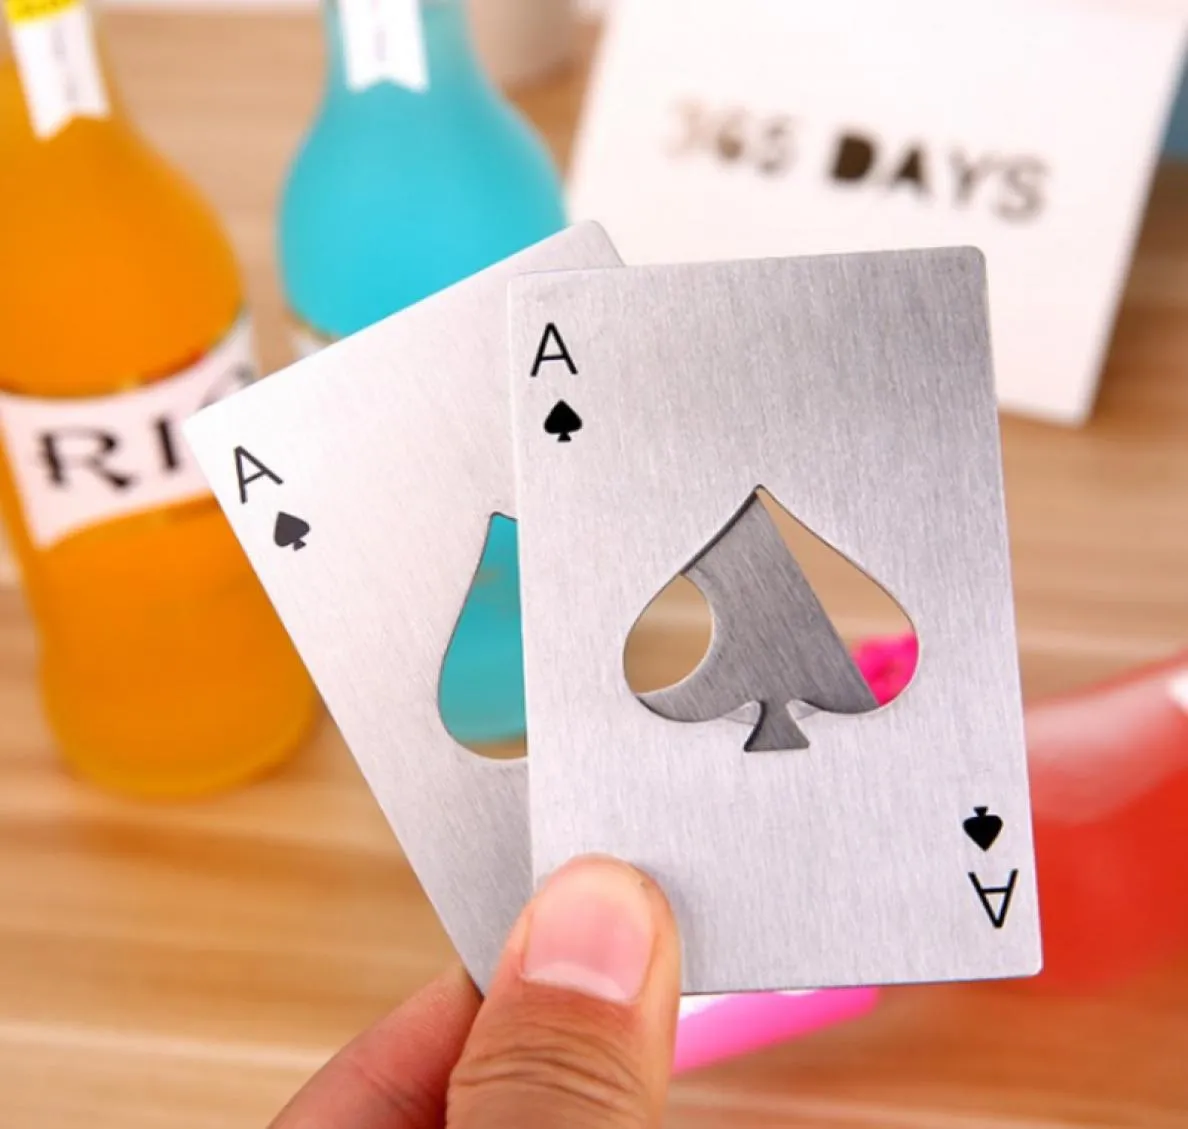 Creative Poker Card открытие бутылочных бутылок Бар инструментов содола бутылки.